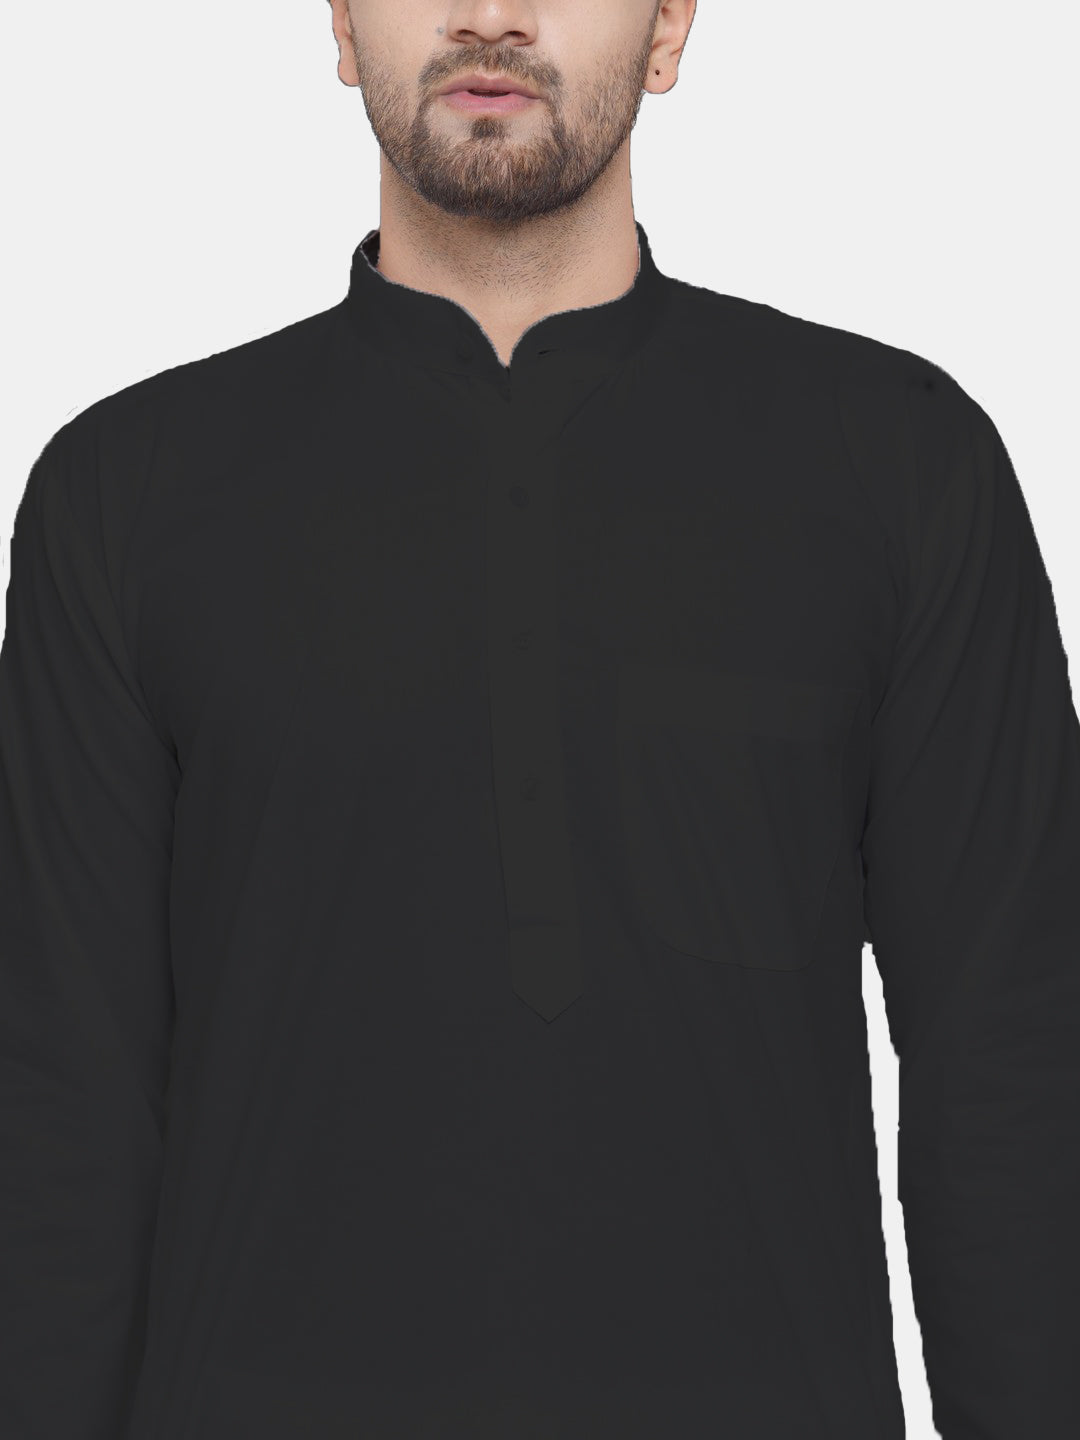 Men's Black Solid Cotton Kurta Only( KO 555 Black ) - Virat Fashions